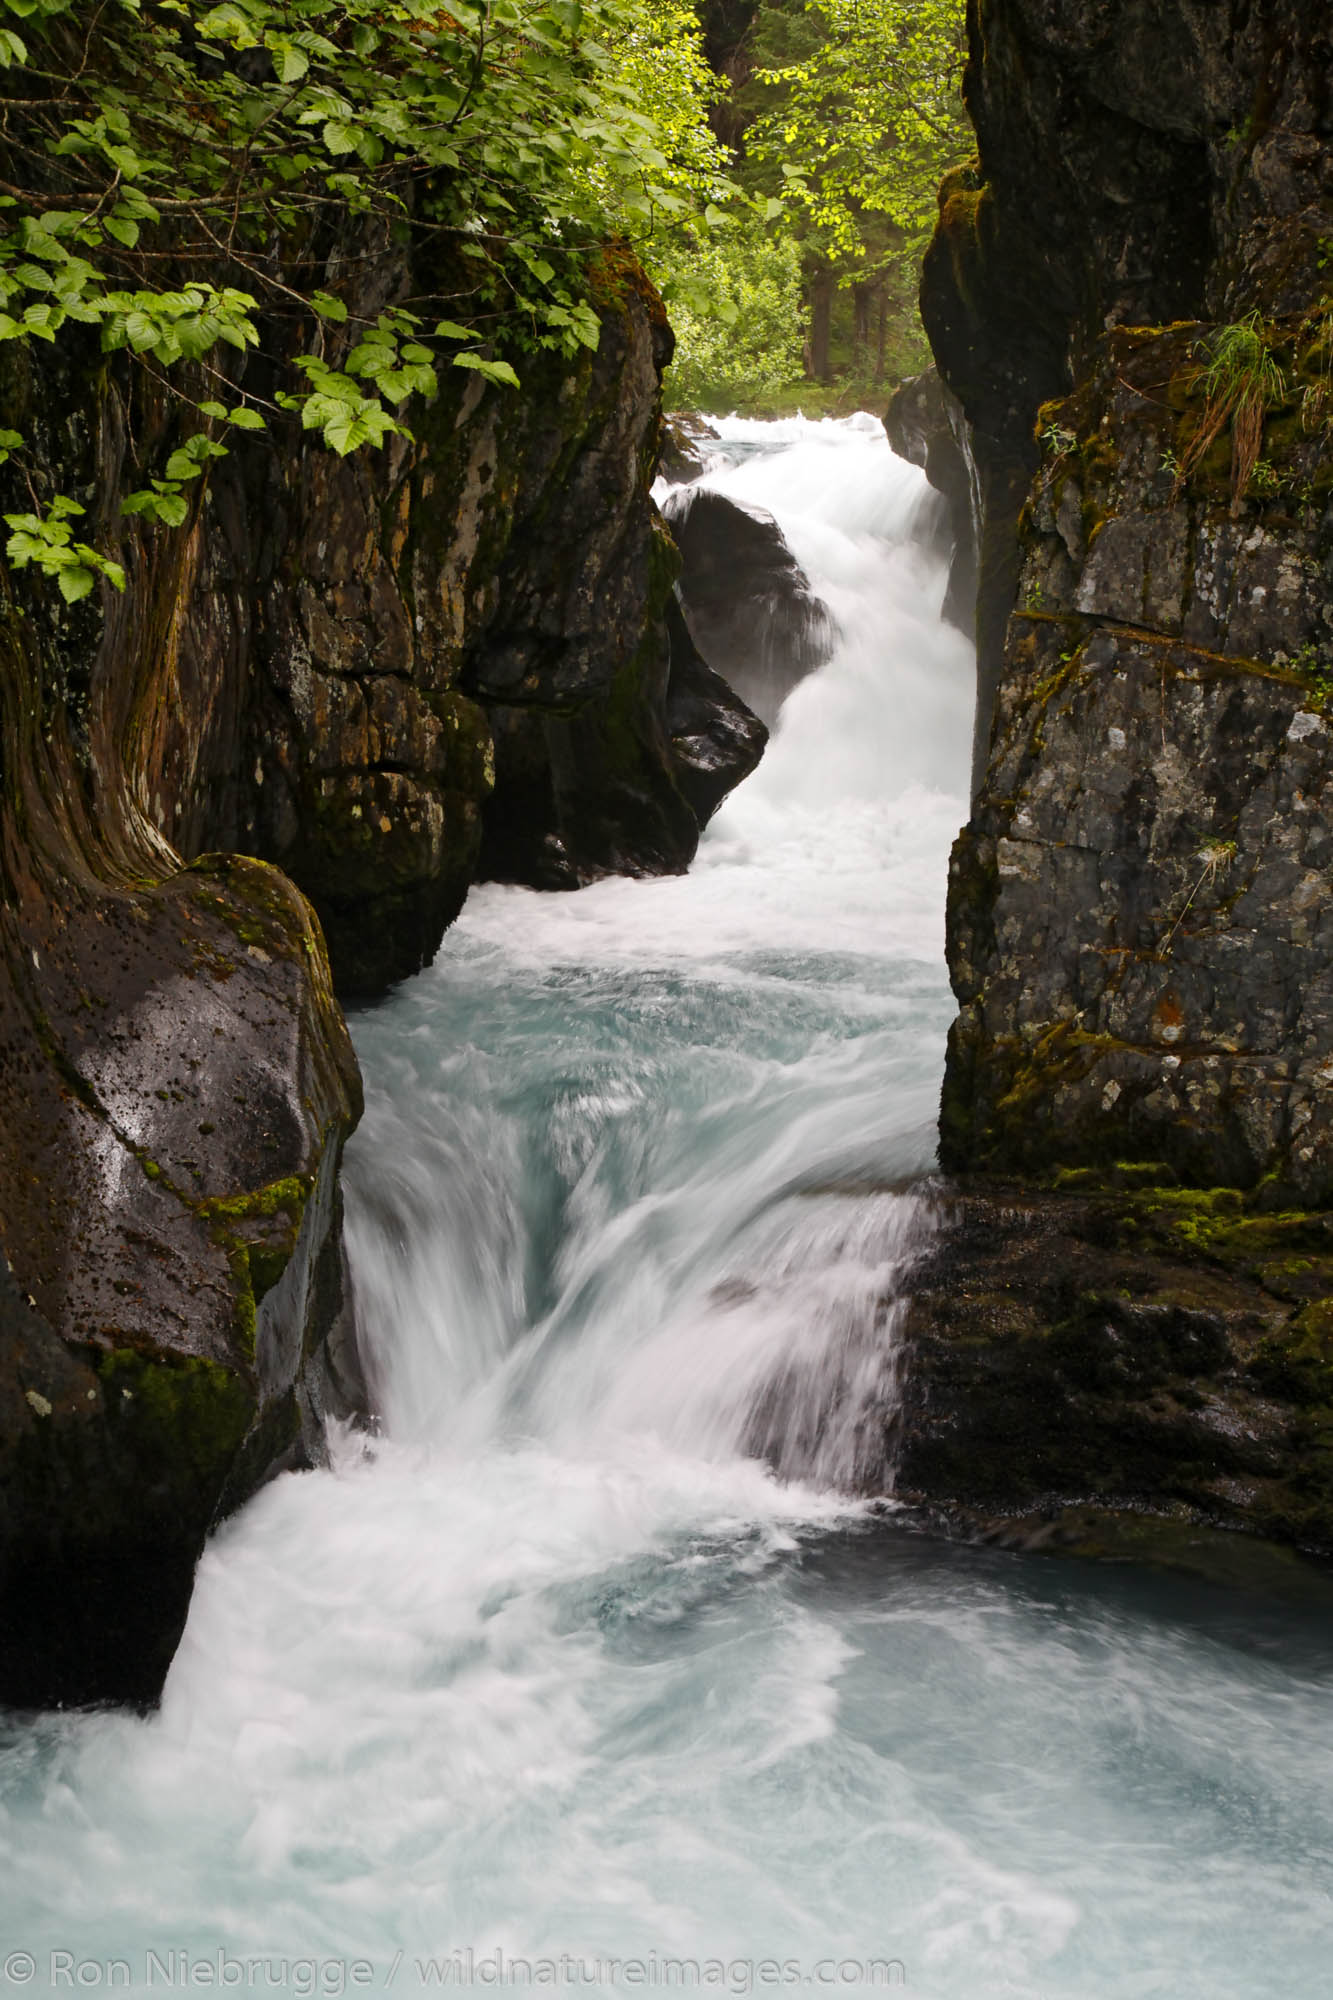 Winner Creek Gorge, from the Winner Creek Gorge Trail, Girdwood, Chugach National Forest, Alaska.